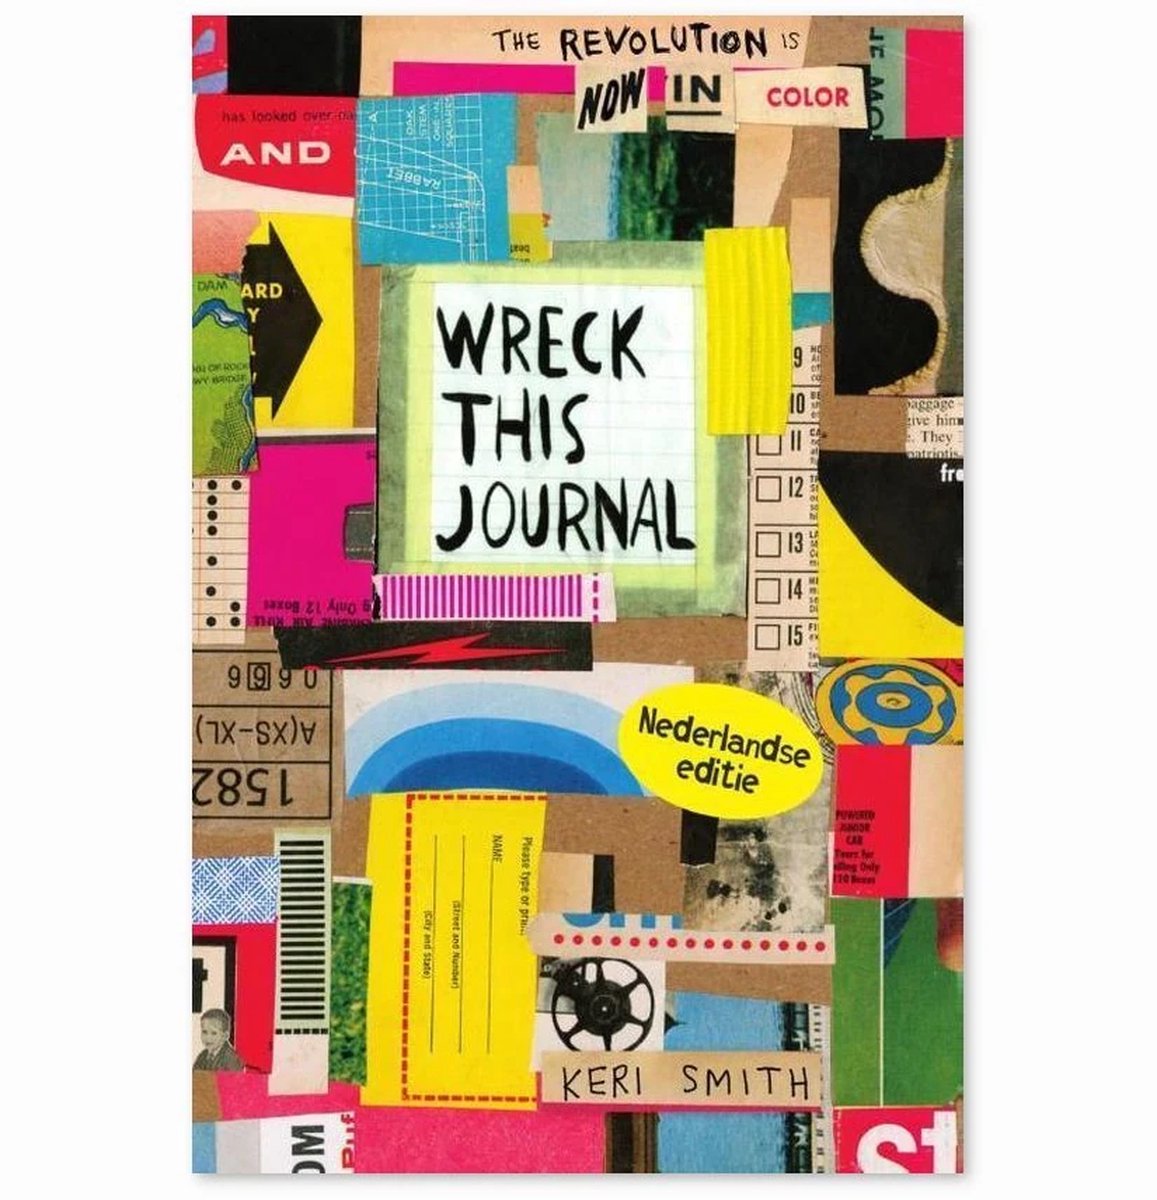 Wreck this journal - Wreck this journal, nu in kleur! - Keri Smith